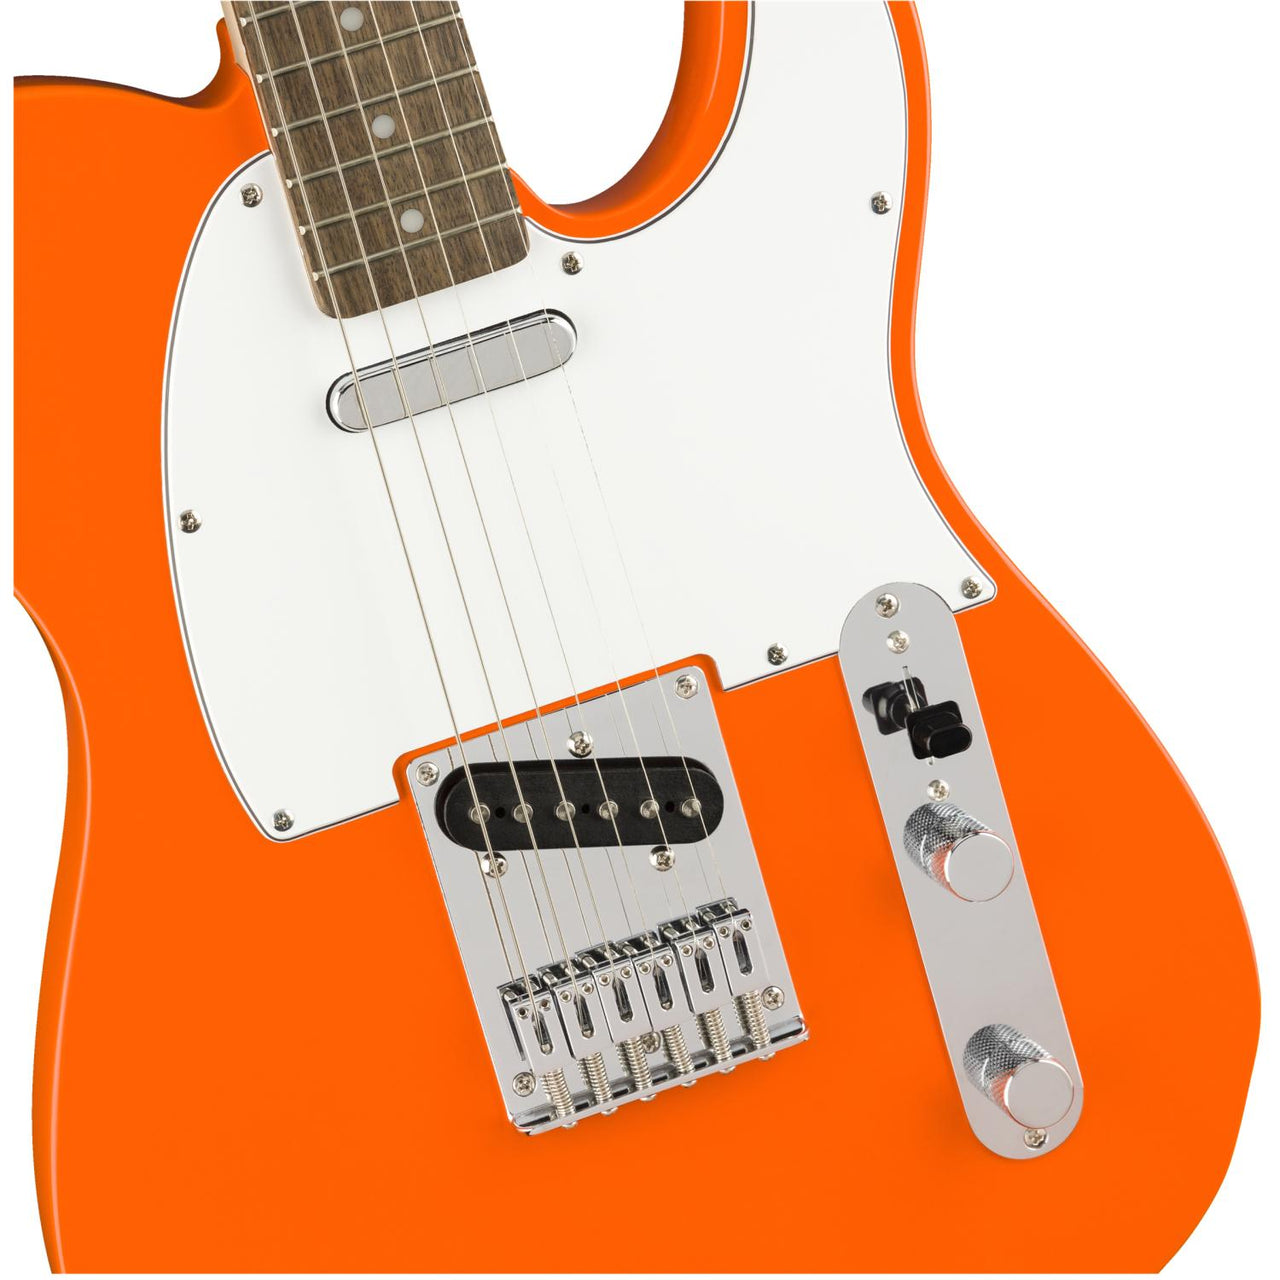 Guitarra Electrica Fender Sq Aff Telecaster Lrl Cpo, 0370200596